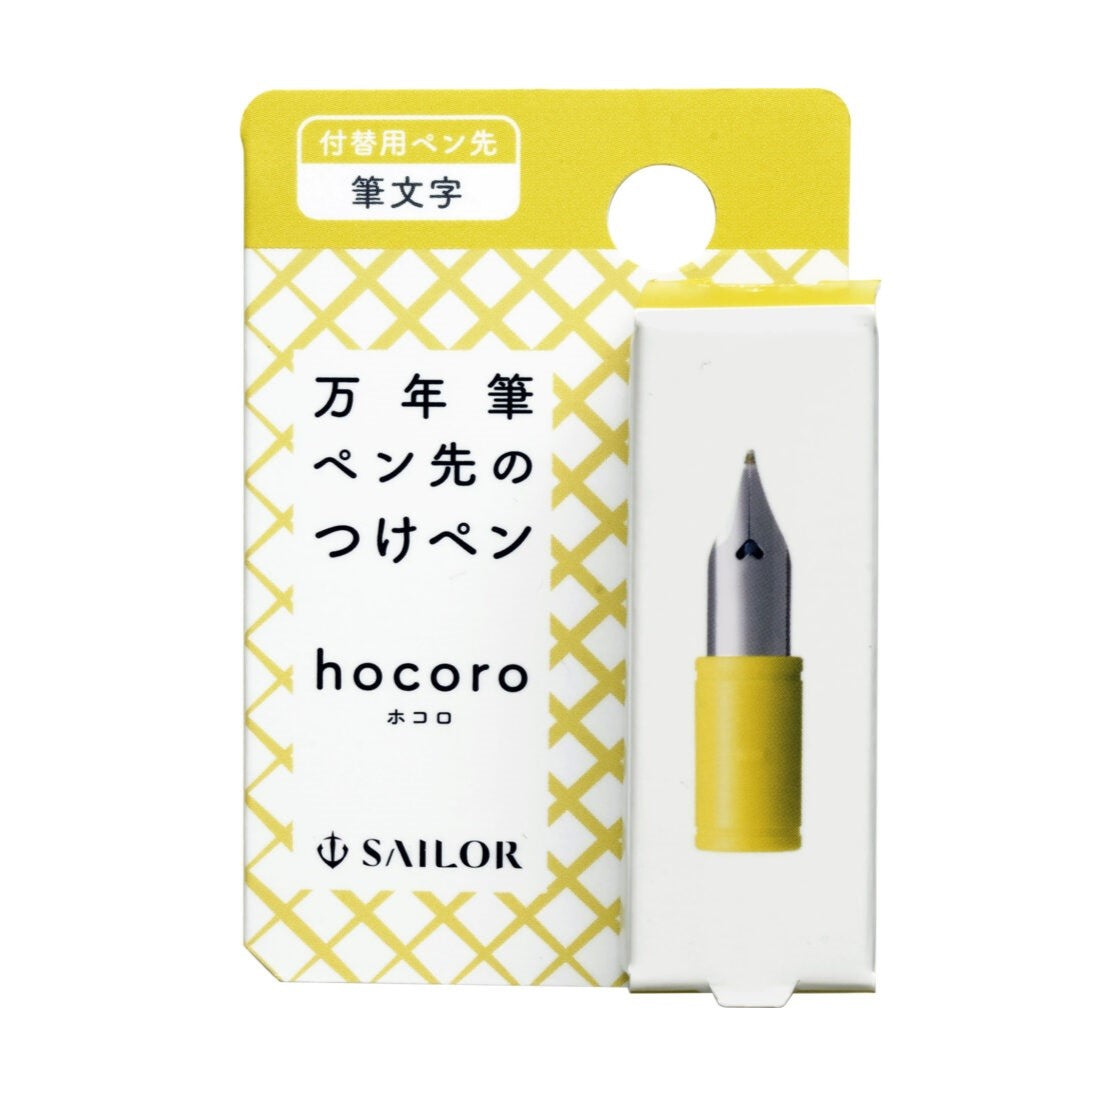 Sailor Hocoro Dip Pen Replacement Nib - Fude/Brushstroke (F)